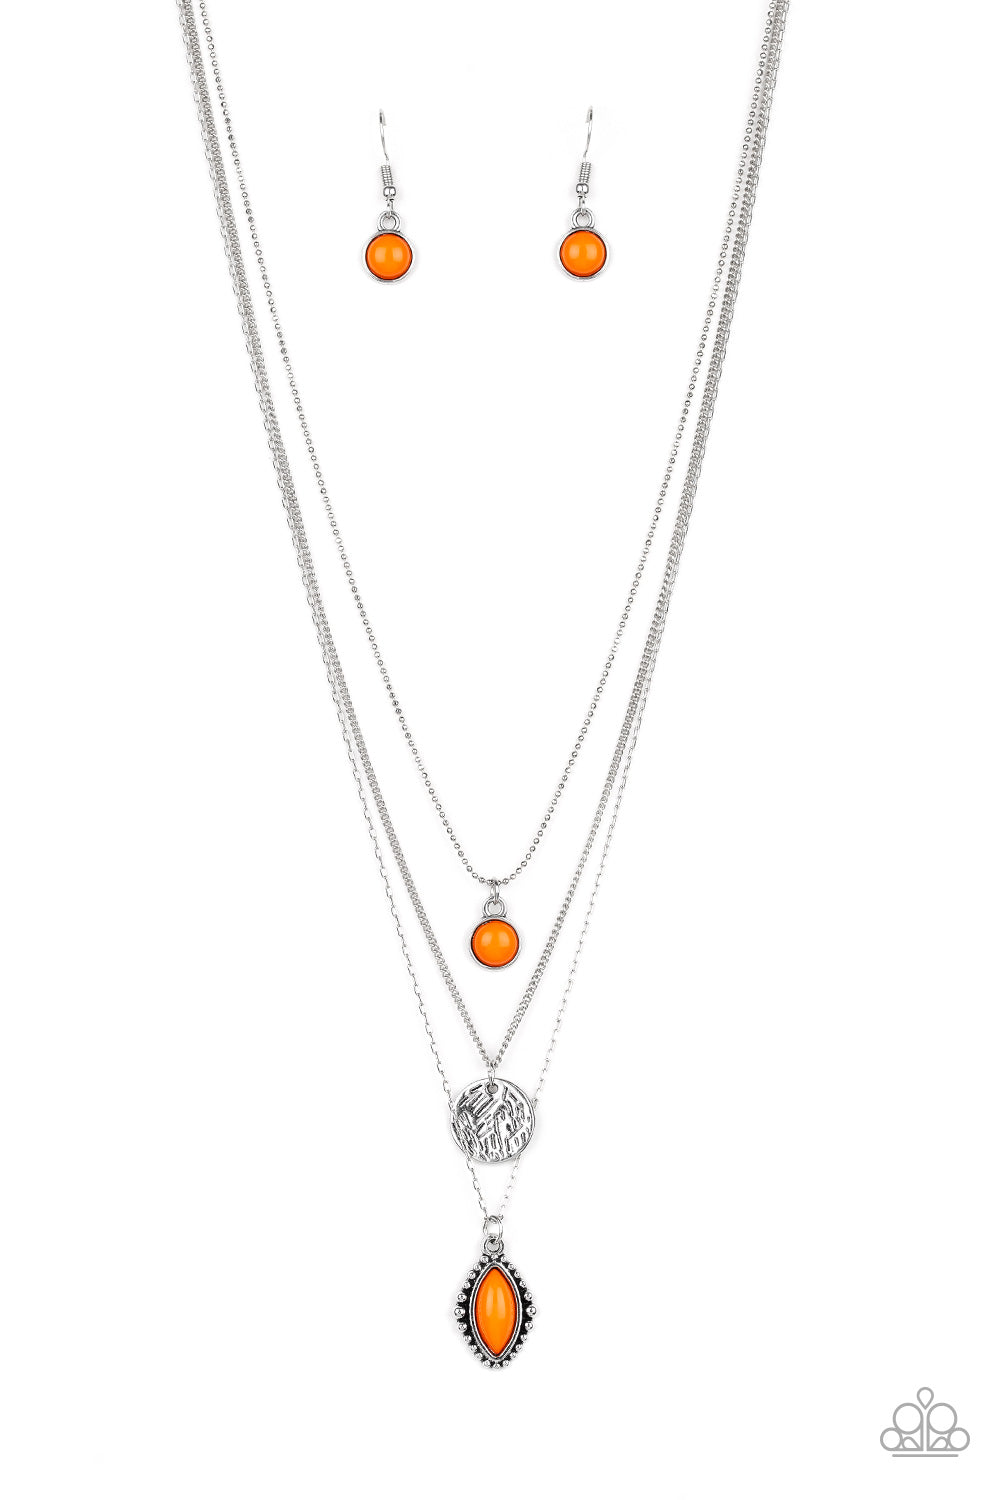 paparazzi-accessories-orange-necklace-8-587